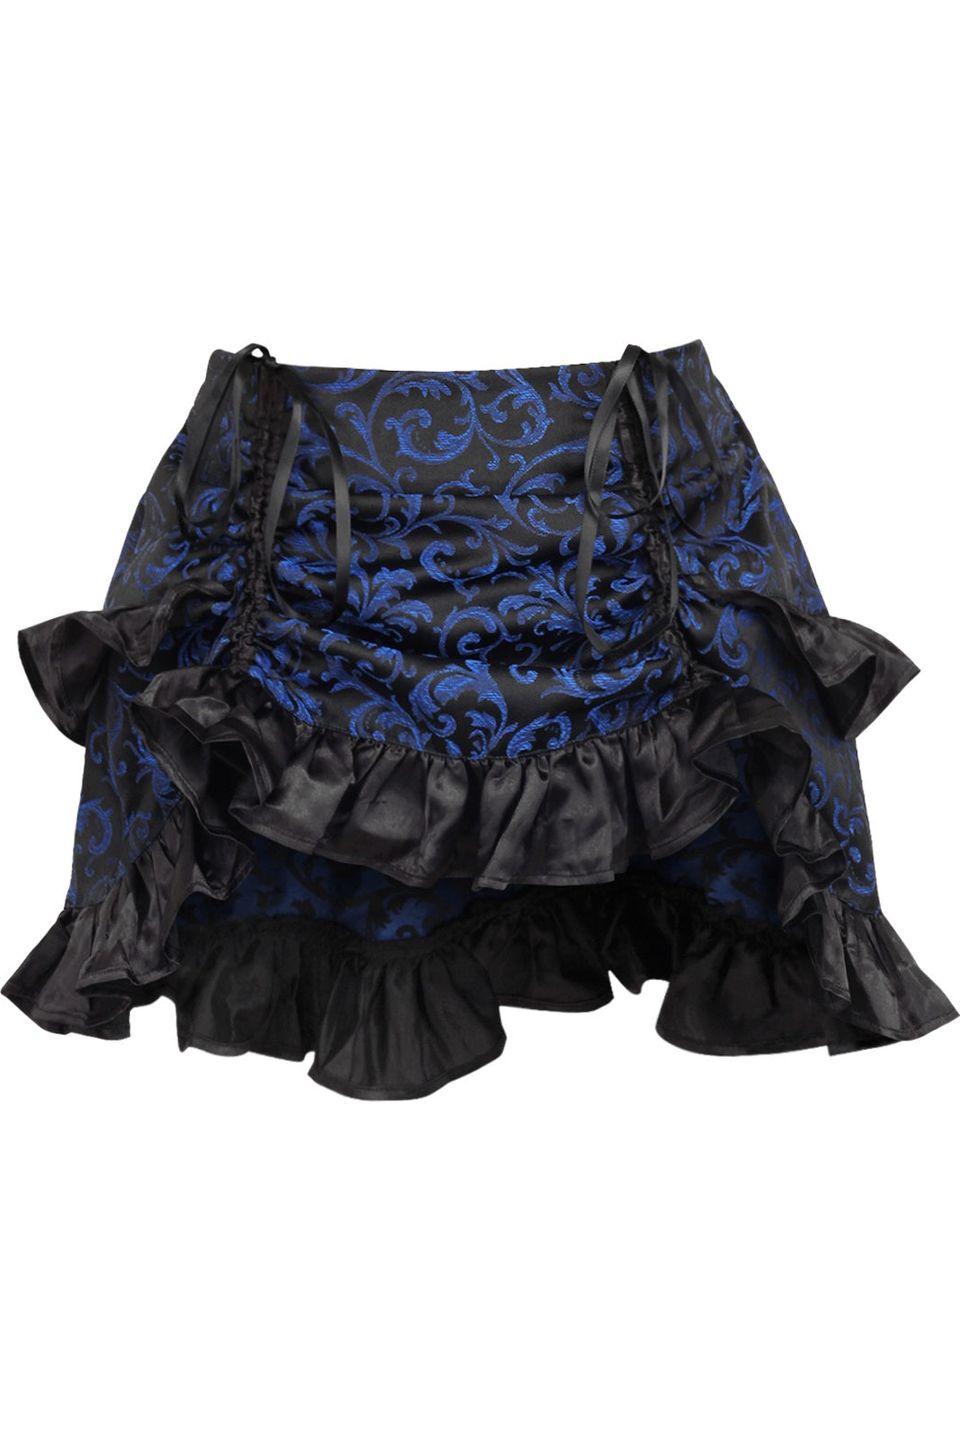 Blue/Black Brocade Ruched Bustle Skirt - AMIClubwear